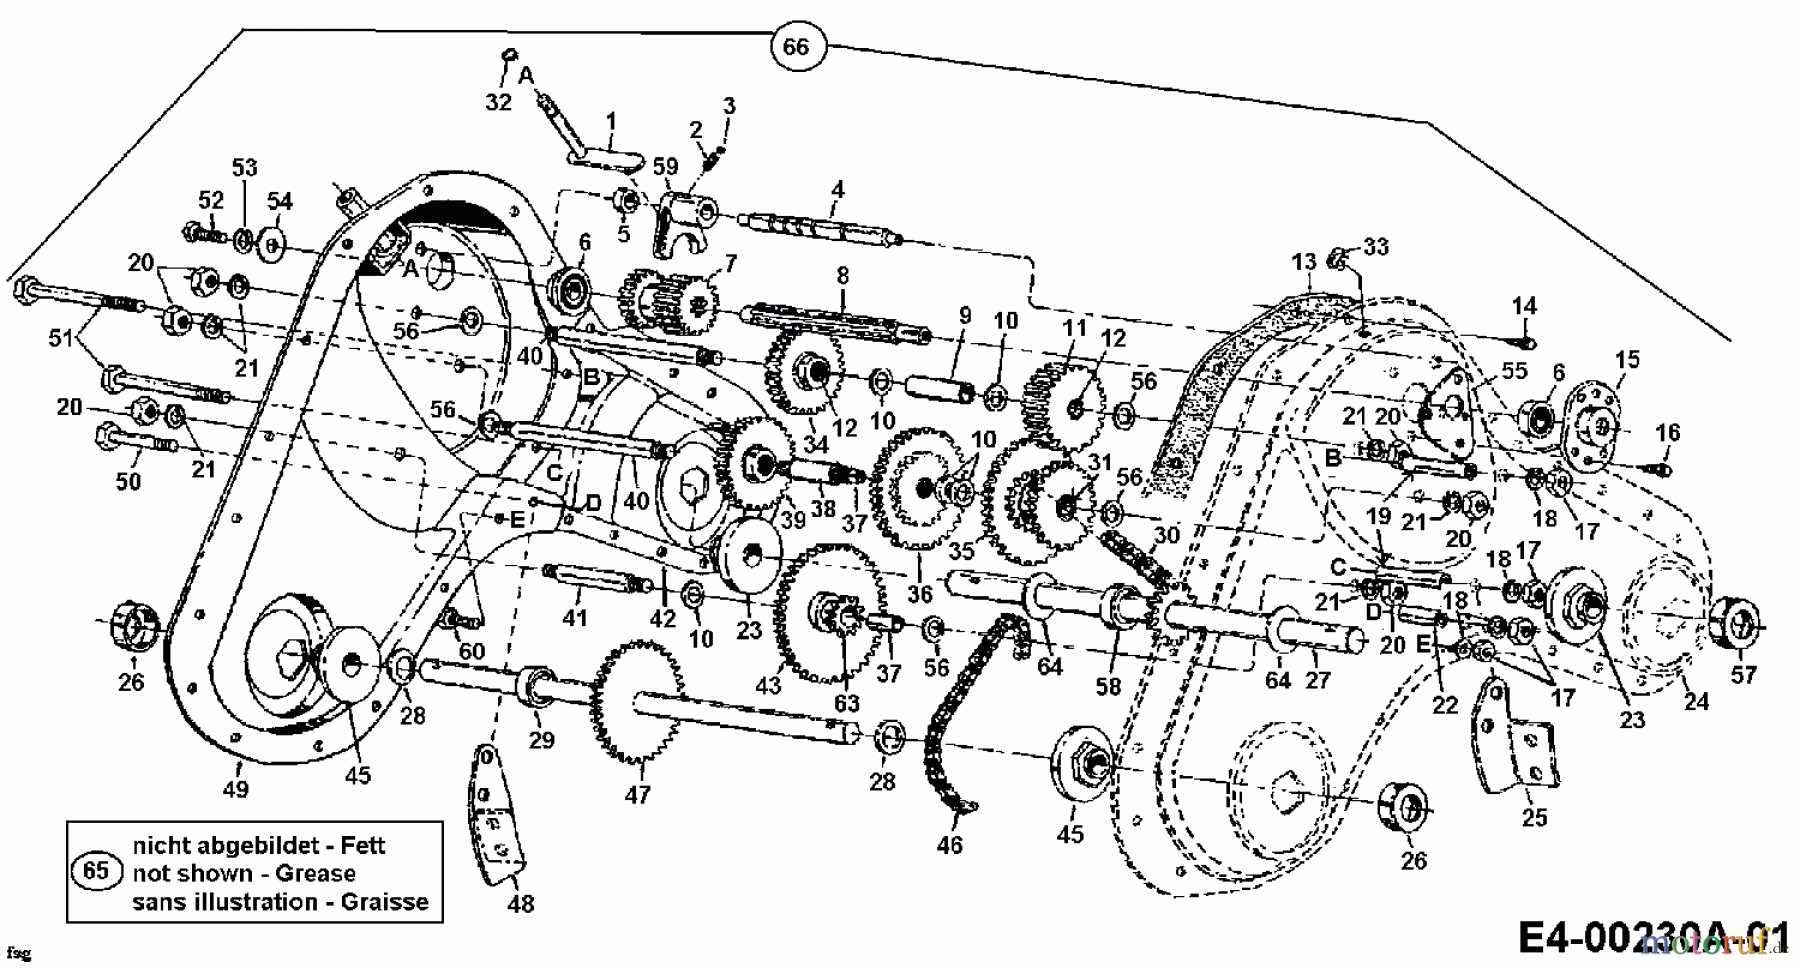  Yard-Man Motorhacken DT 550 21A-440B643  (1998) Getriebe